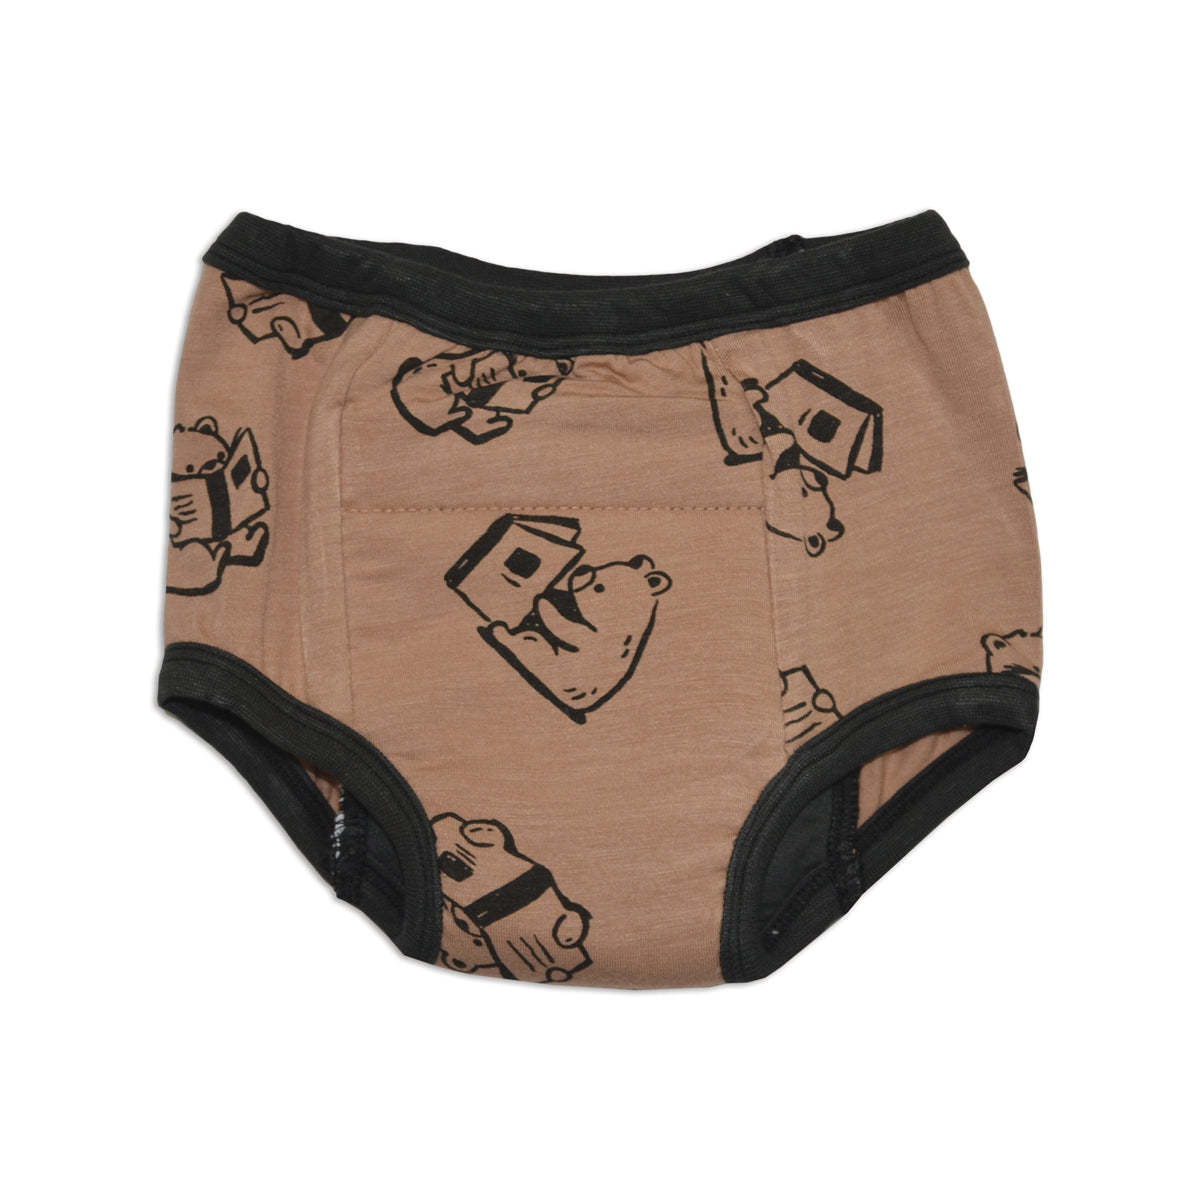 Underwear & Training Pants – Tagged Features_Organic – Pumpkin Pie Kids